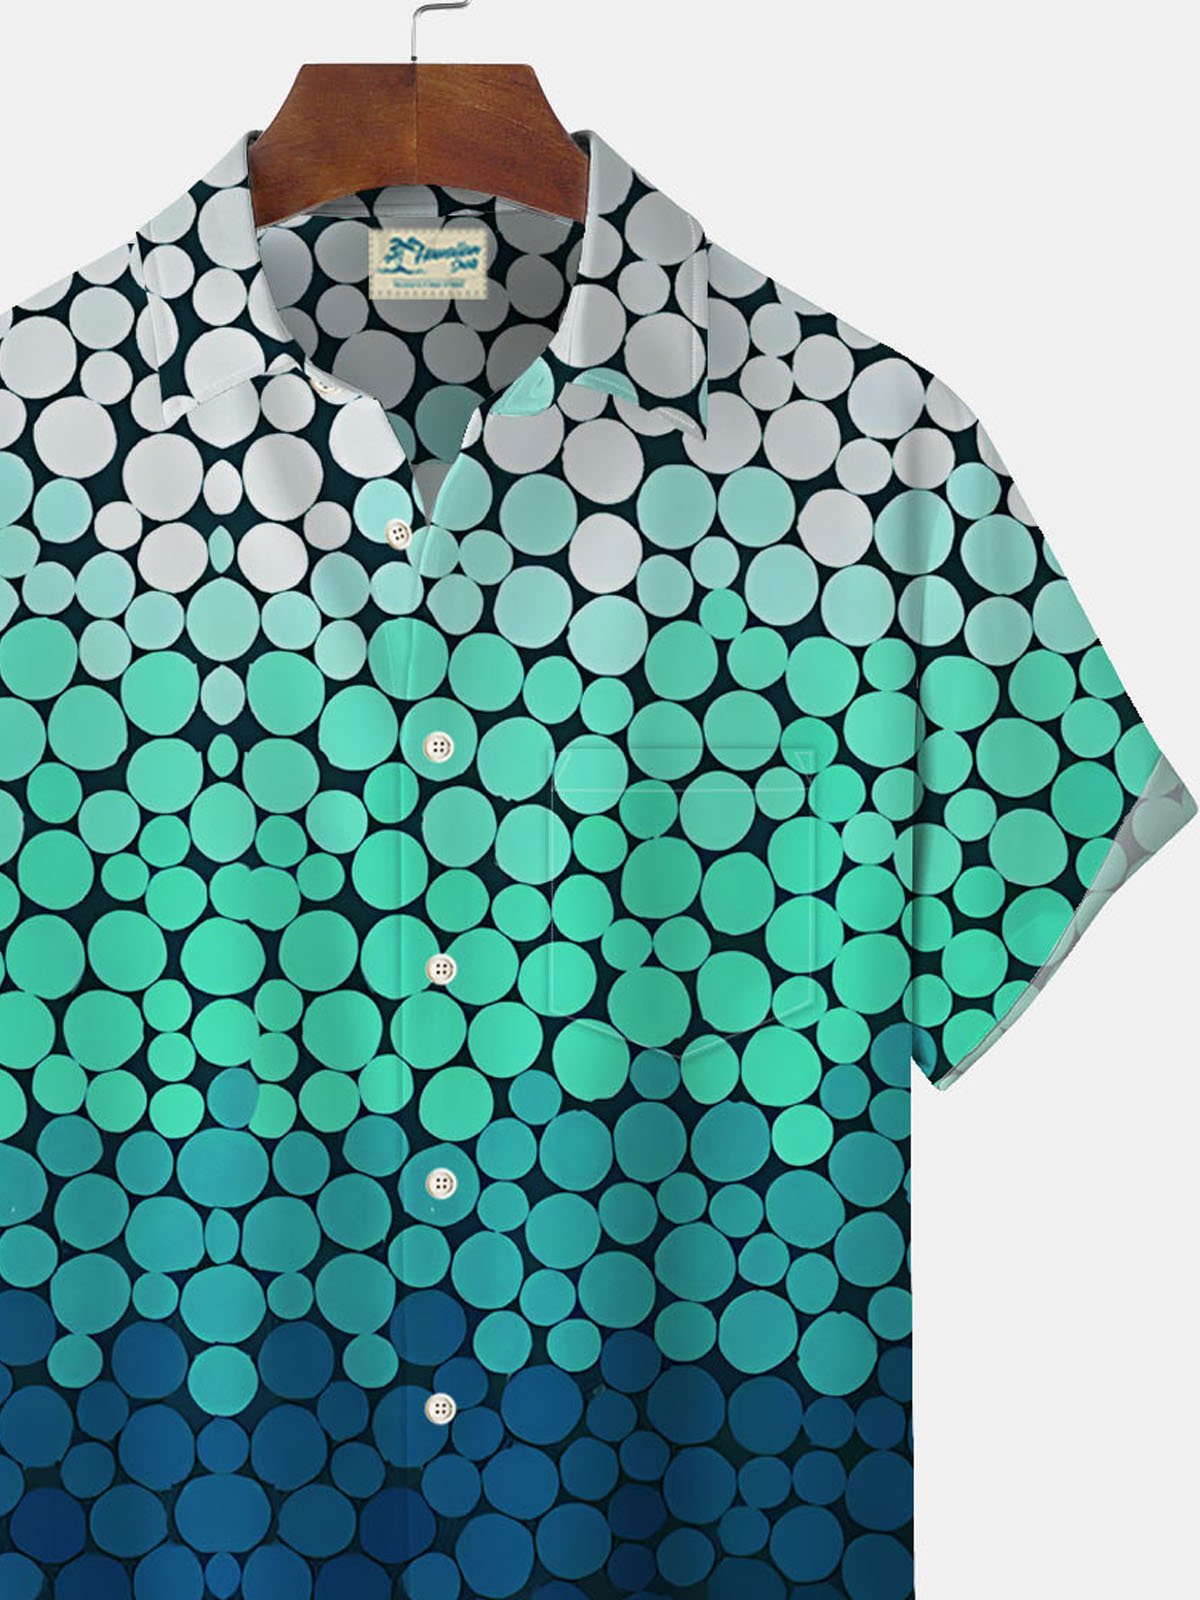 Royaura Geometric Gradient Circular Print Men's Button Pocket Shirt